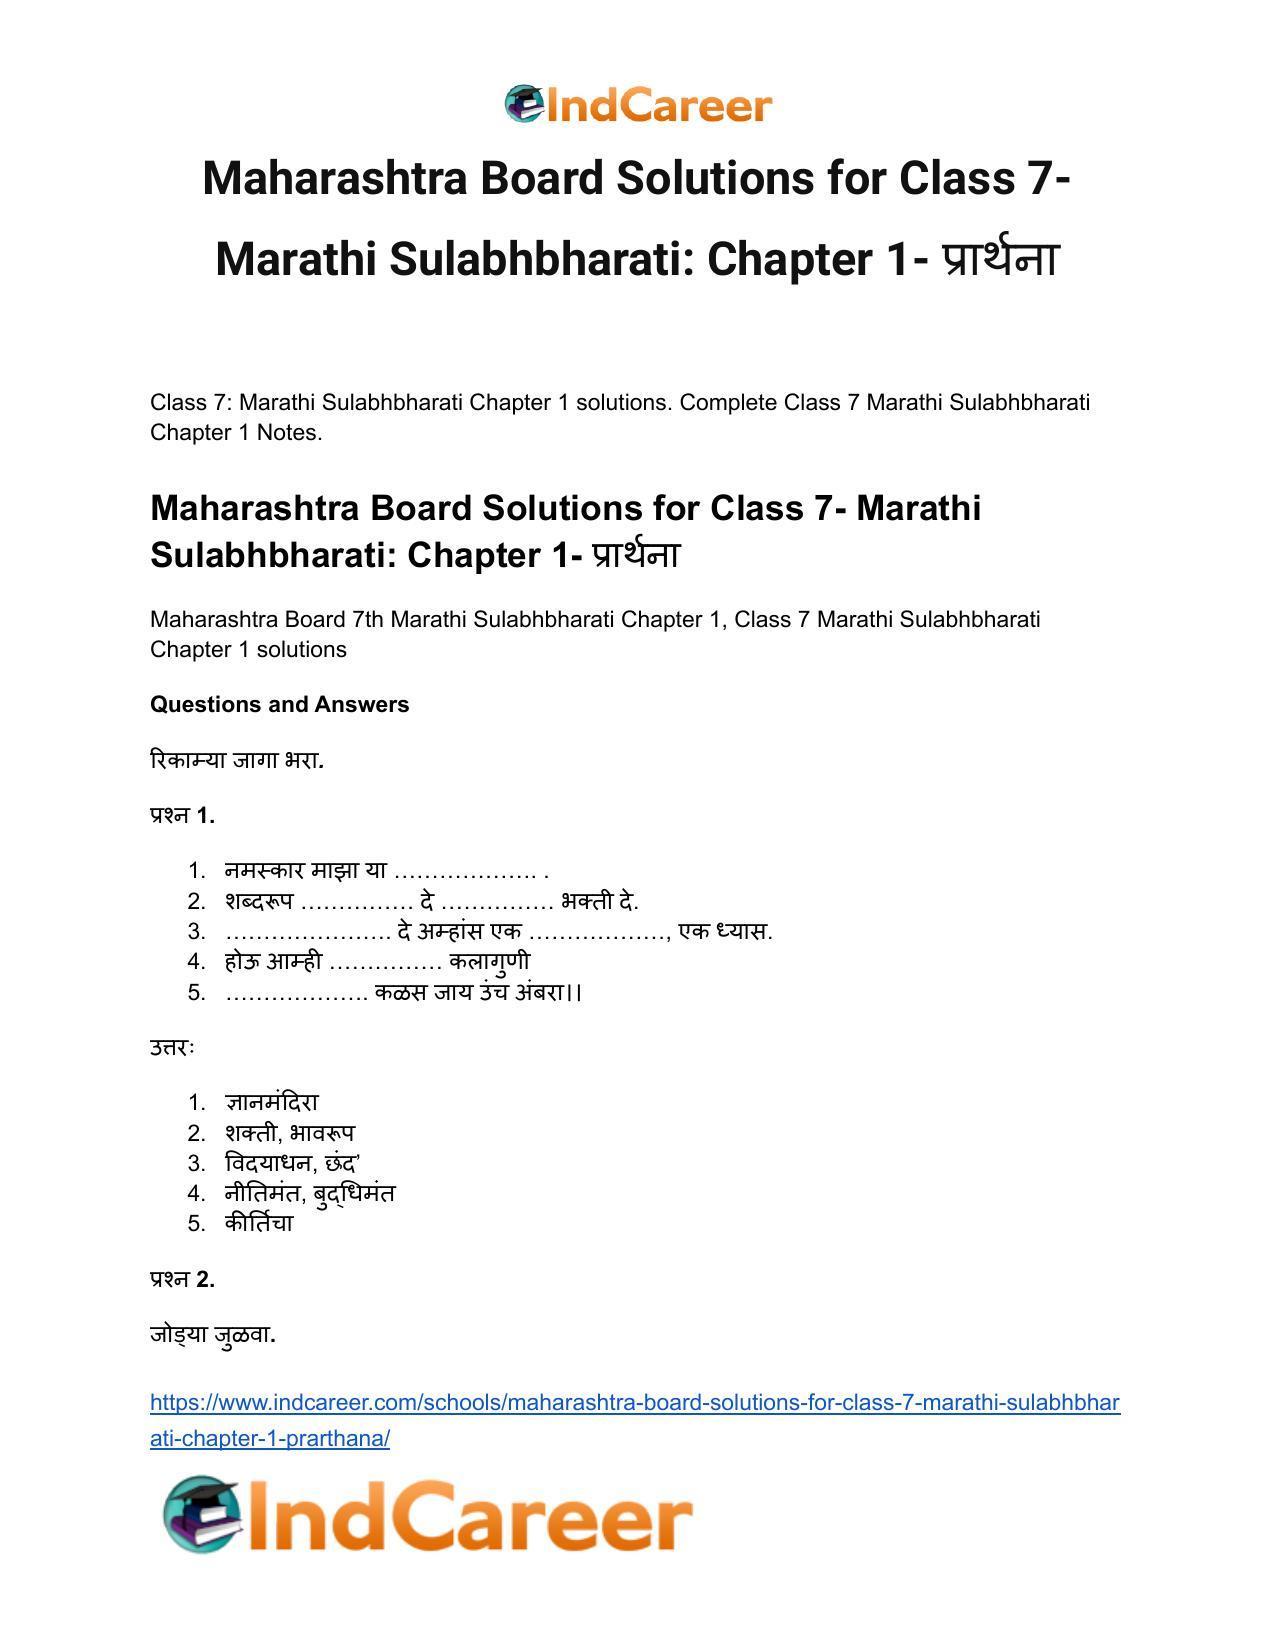 Maharashtra Board Solutions for Class 7- Marathi Sulabhbharati: Chapter 1- प्रार्थना - Page 2